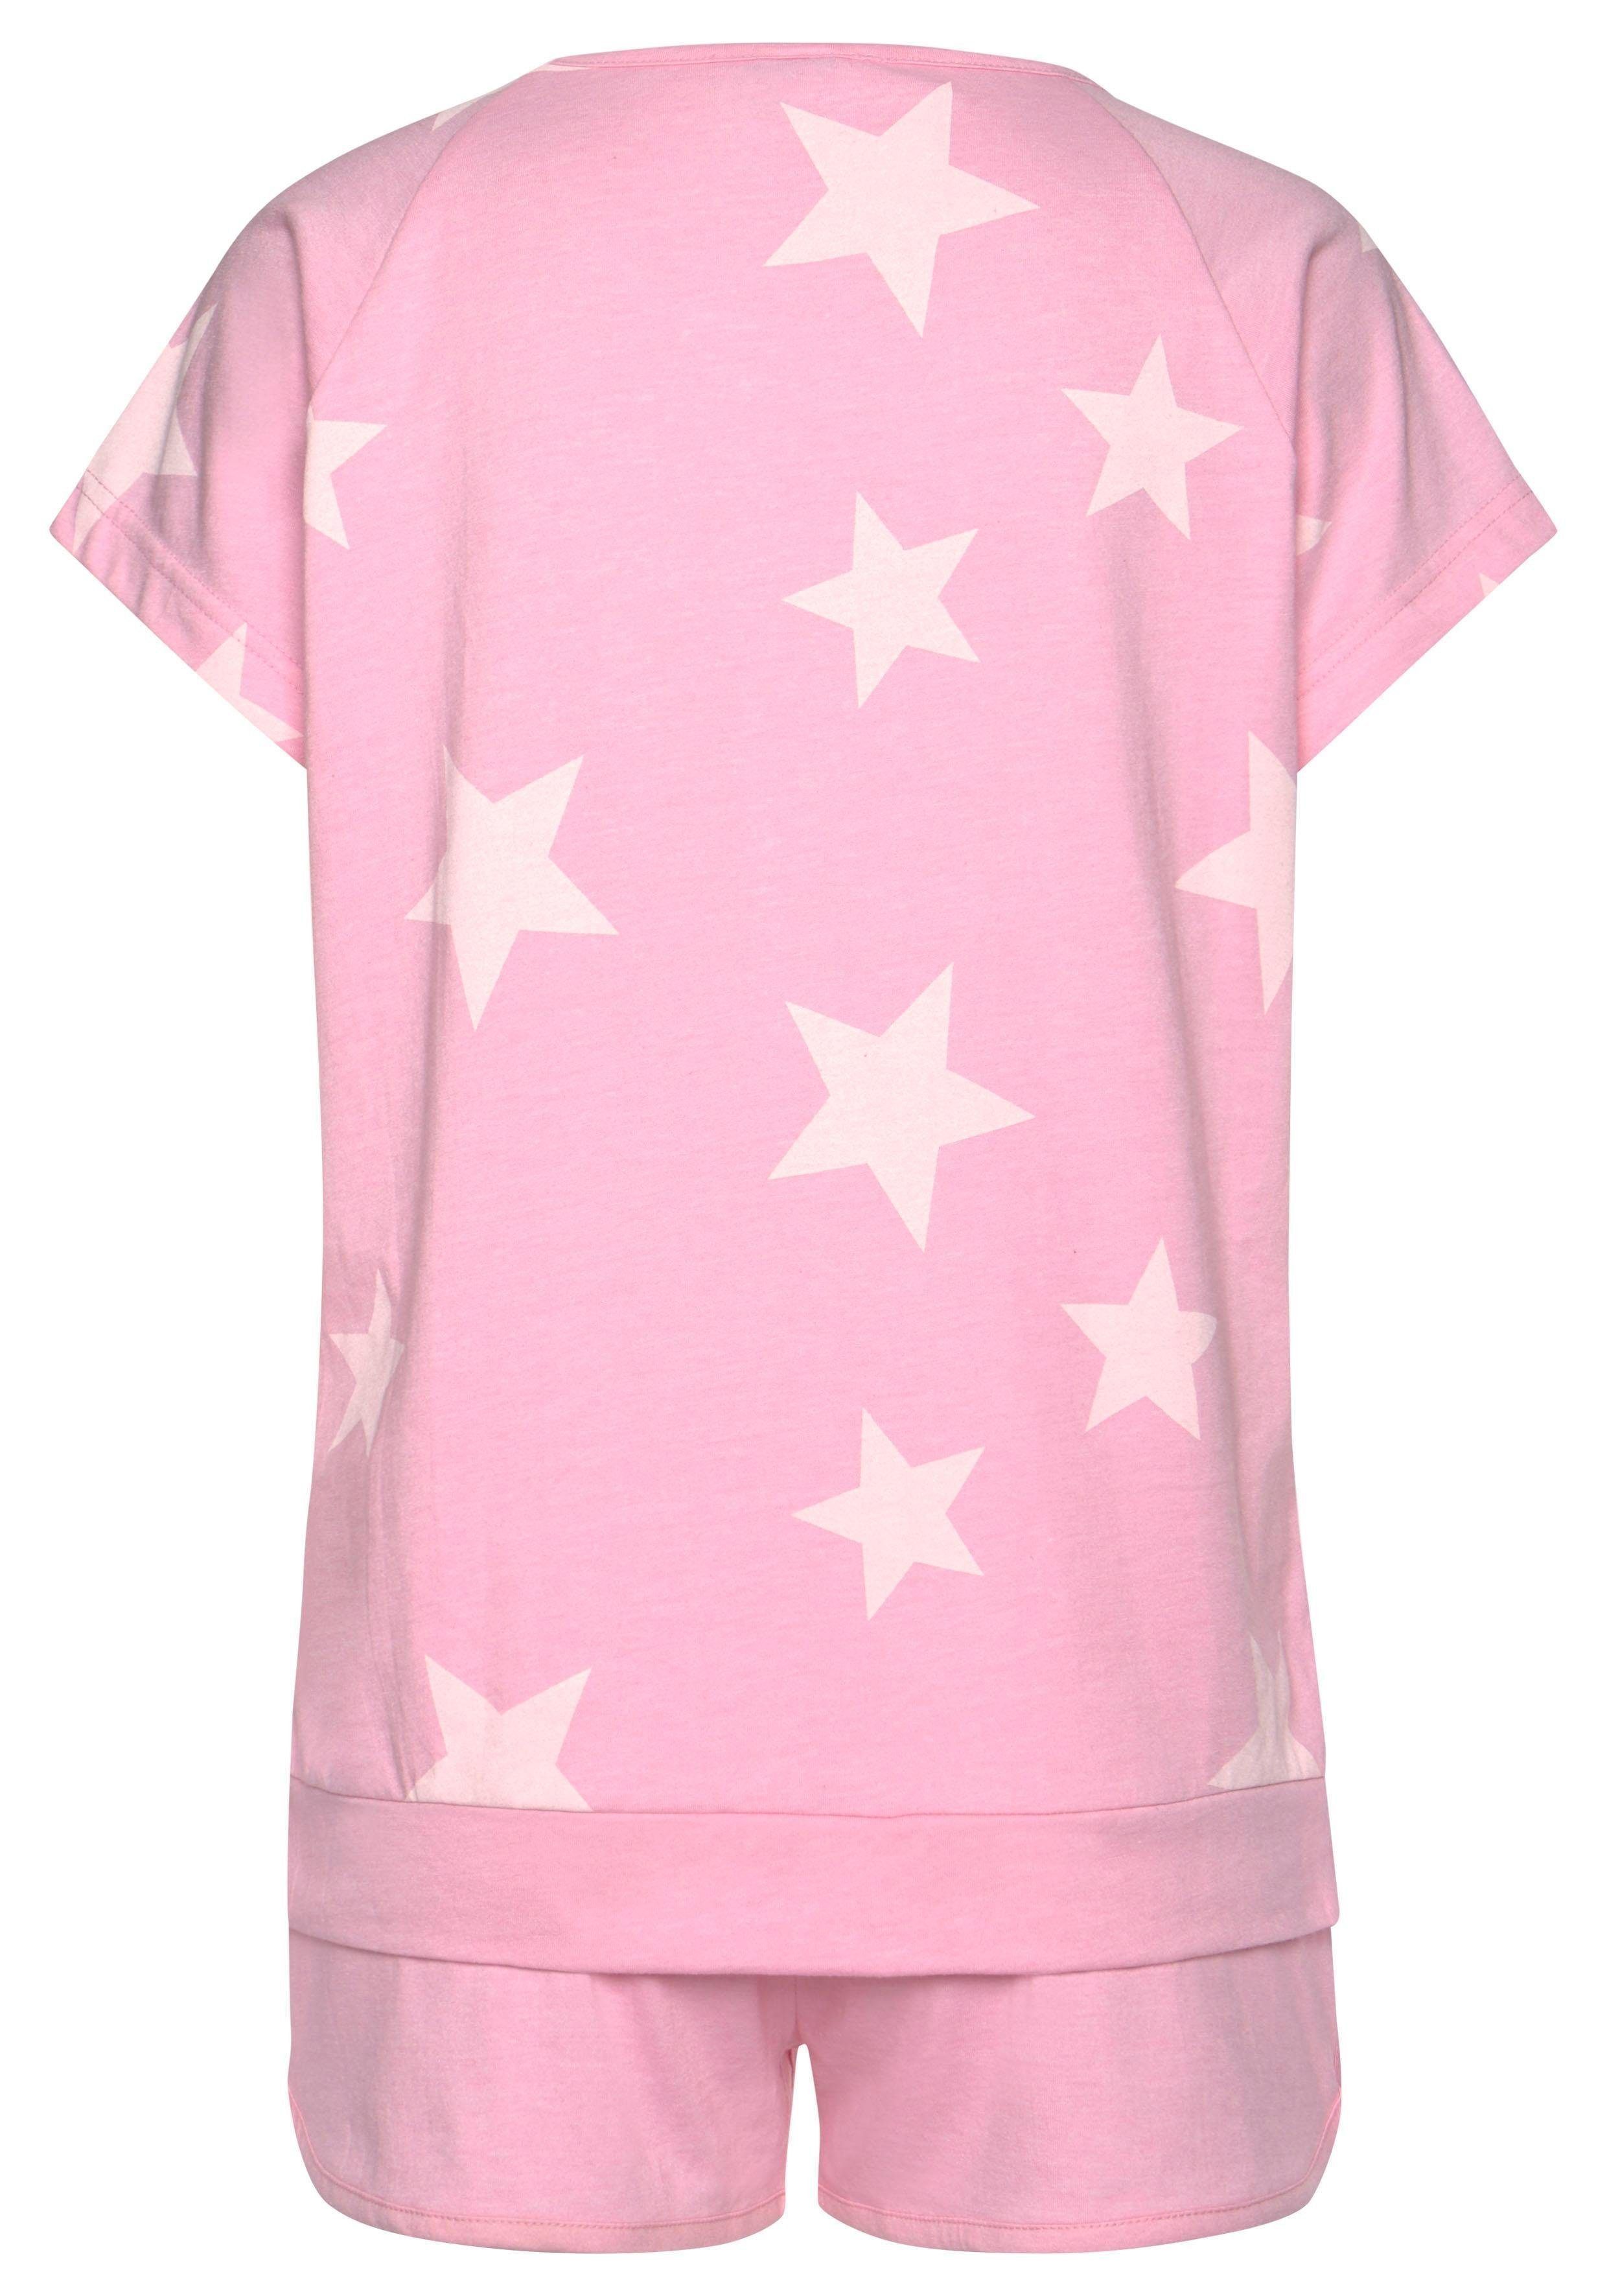 Shorty Arizona grau, tlg., 2 mit Stück) in rosa Optik (4 Sternen melierter